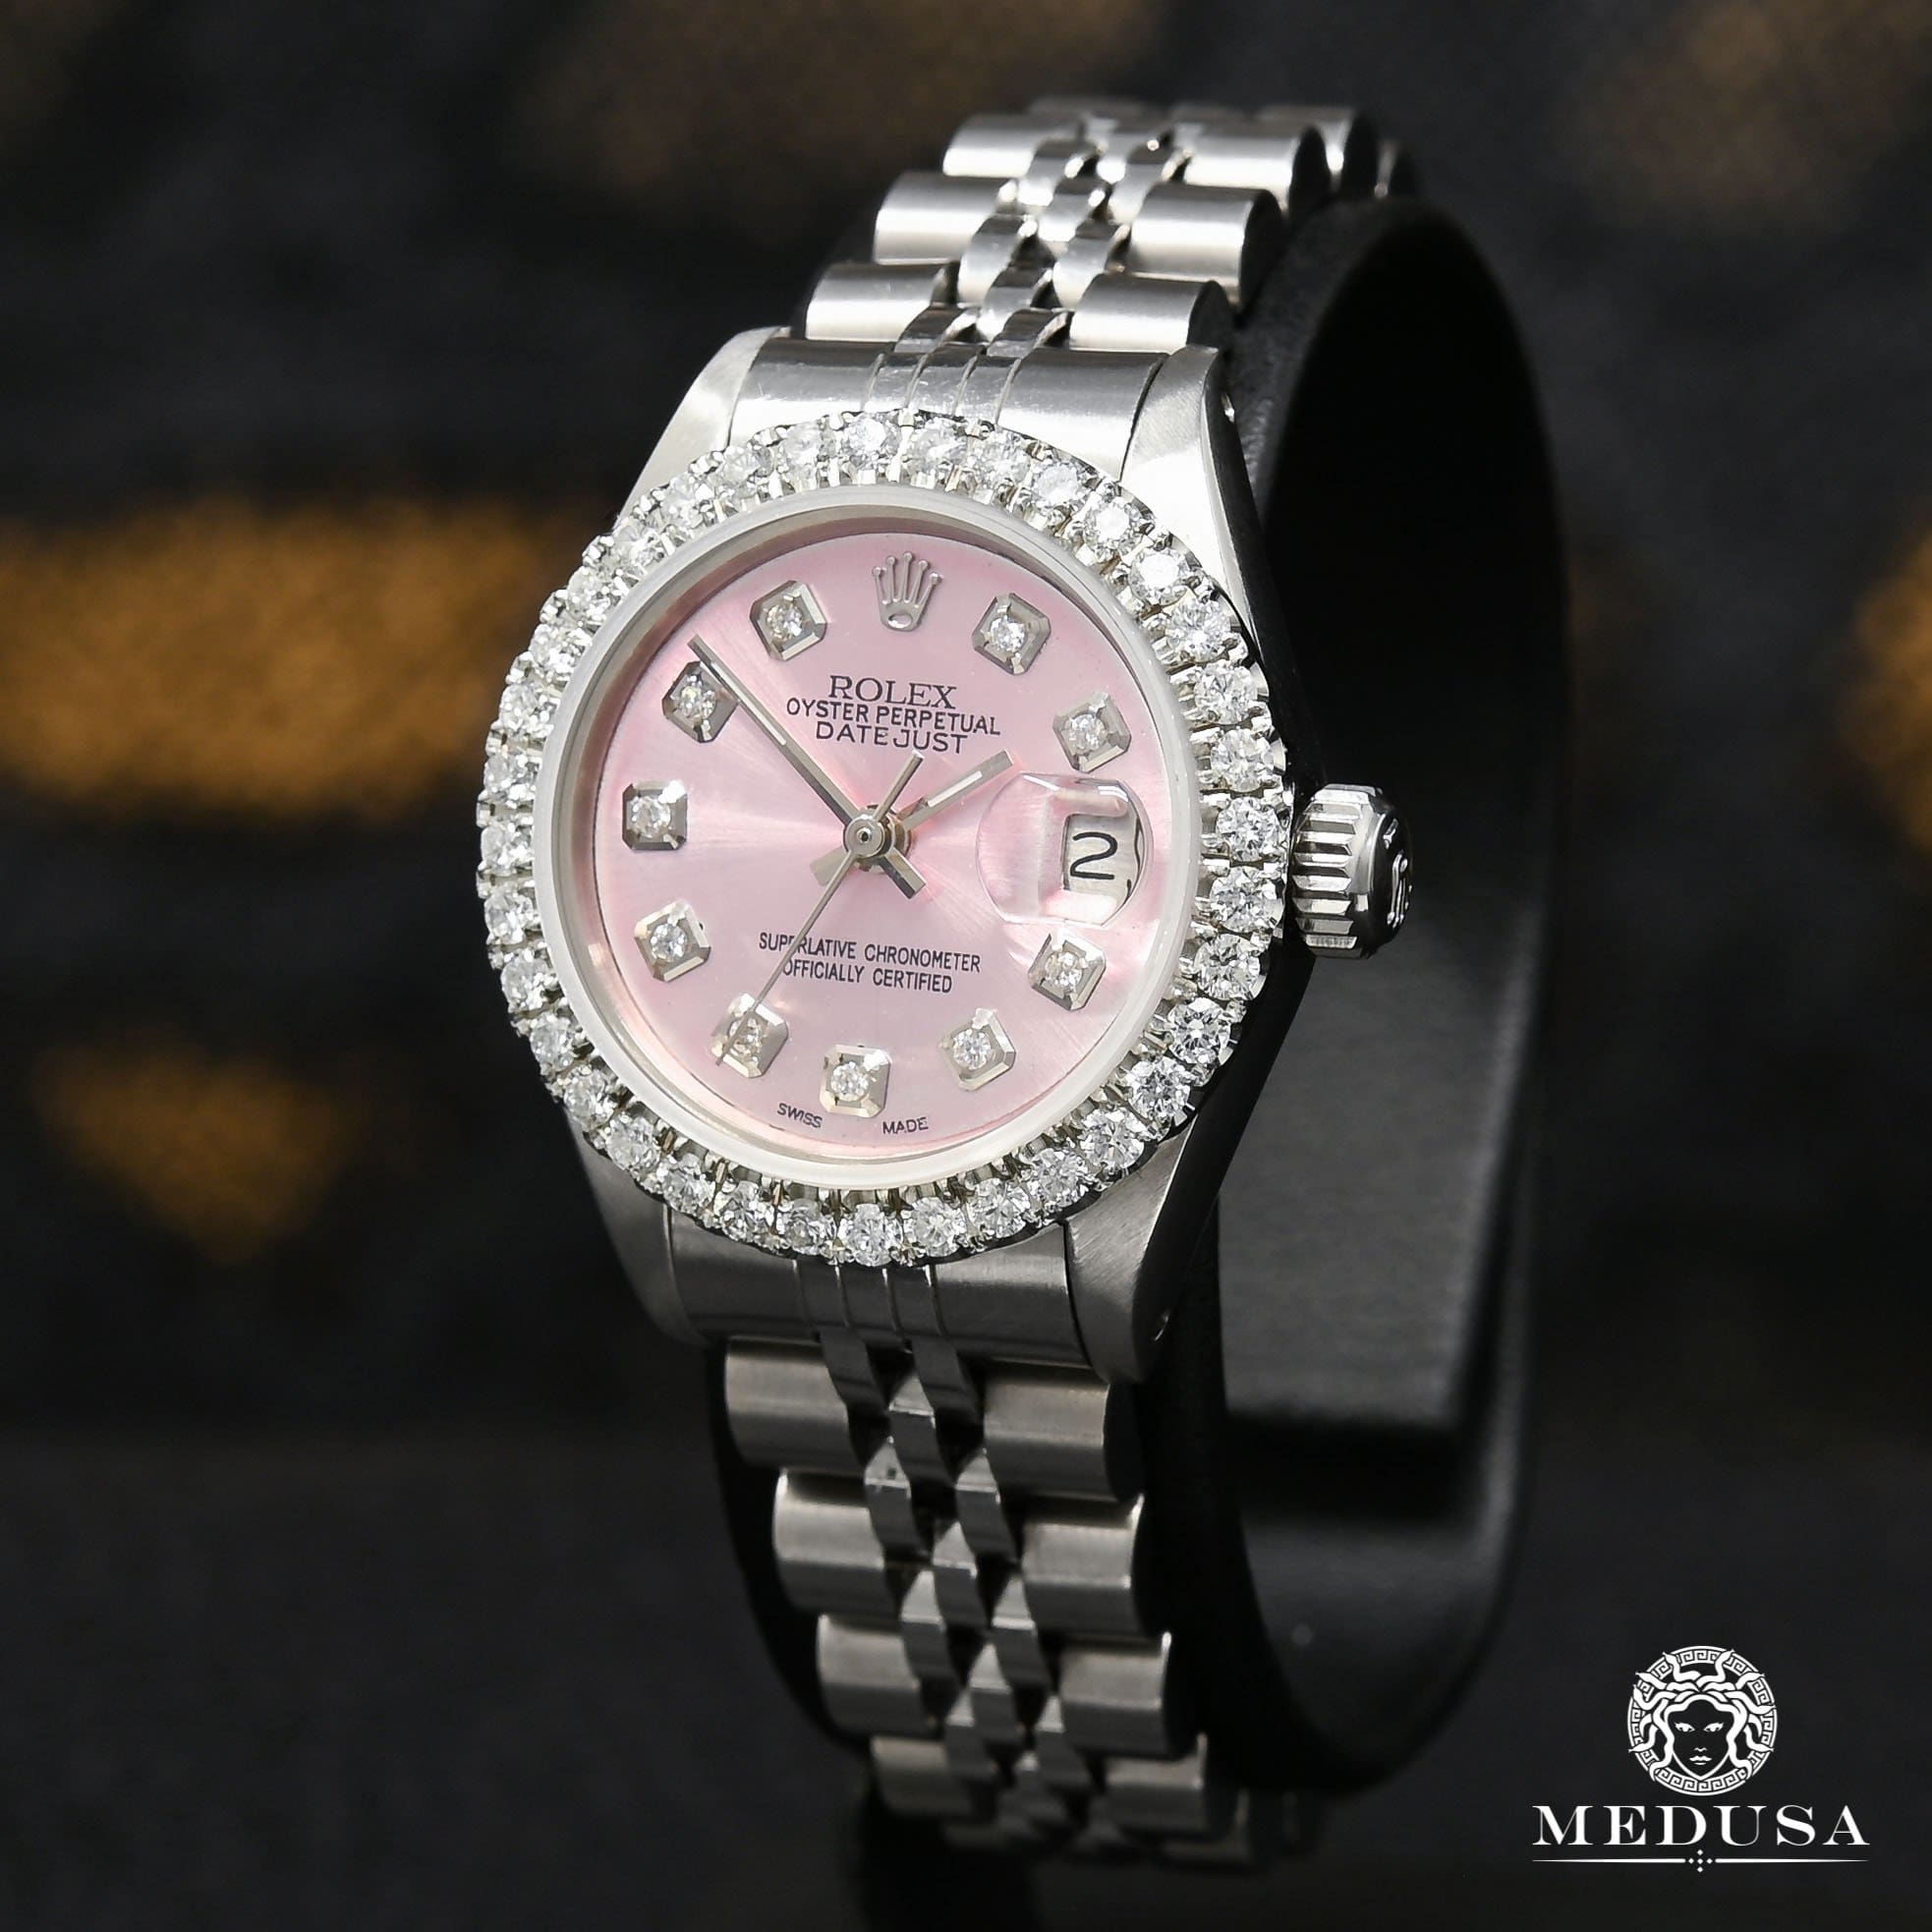 Rolex watch | Rolex Datejust 26mm Women's Watch - Pink Stainless Stainless